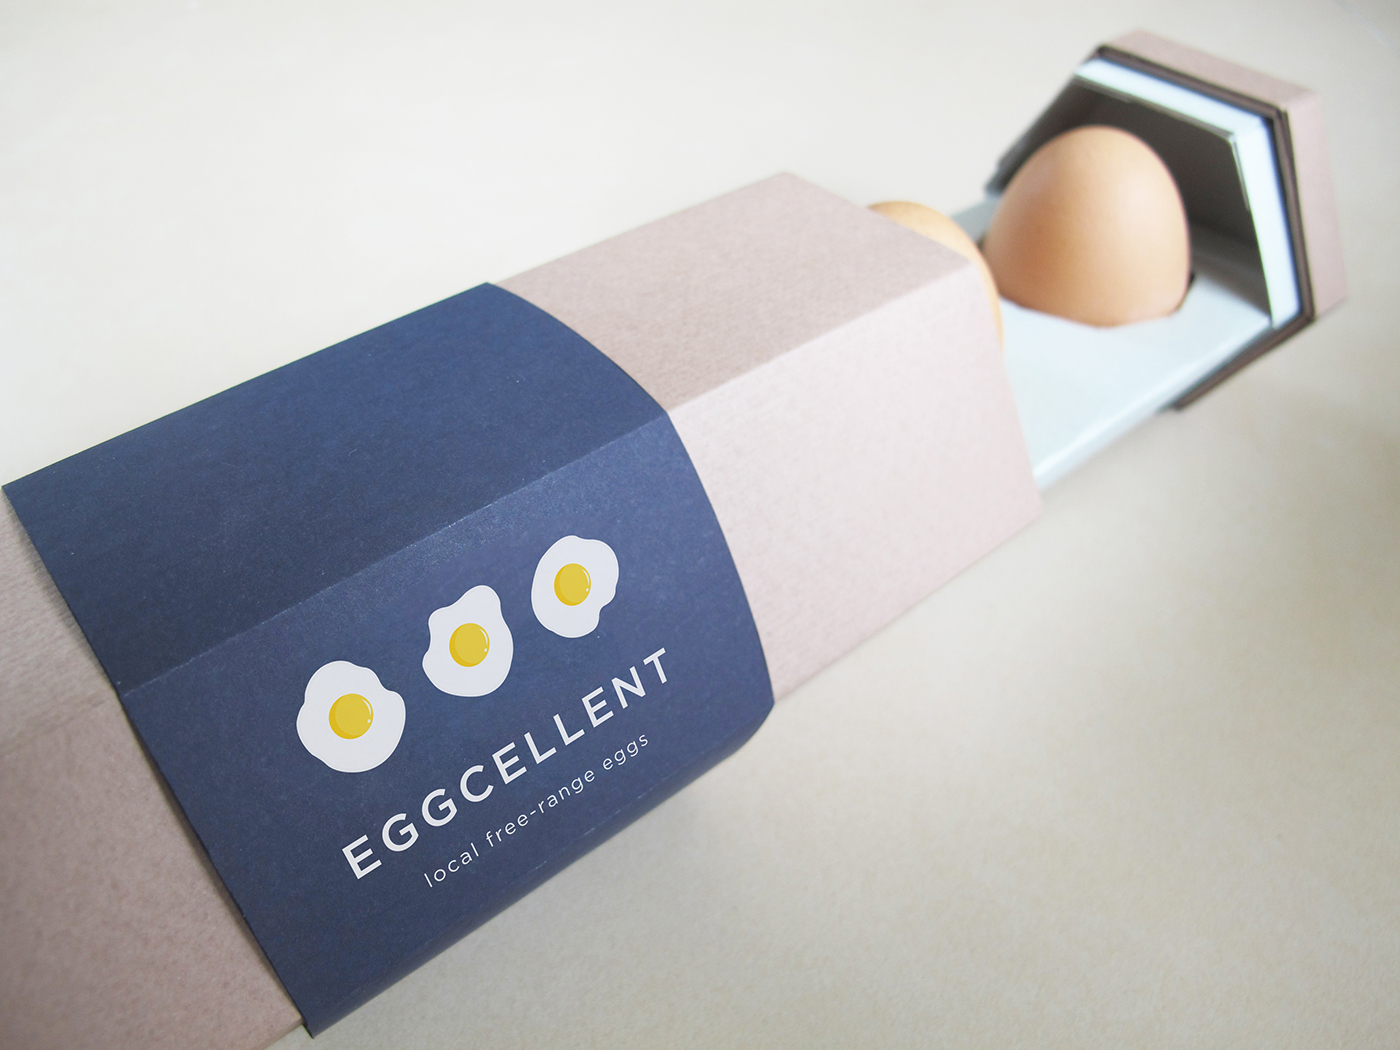 #egg #package  #packaging #box #eggcellent #excellent #structure #Branding #brand #food    #paper #Cardboard   #illustration #hexagon